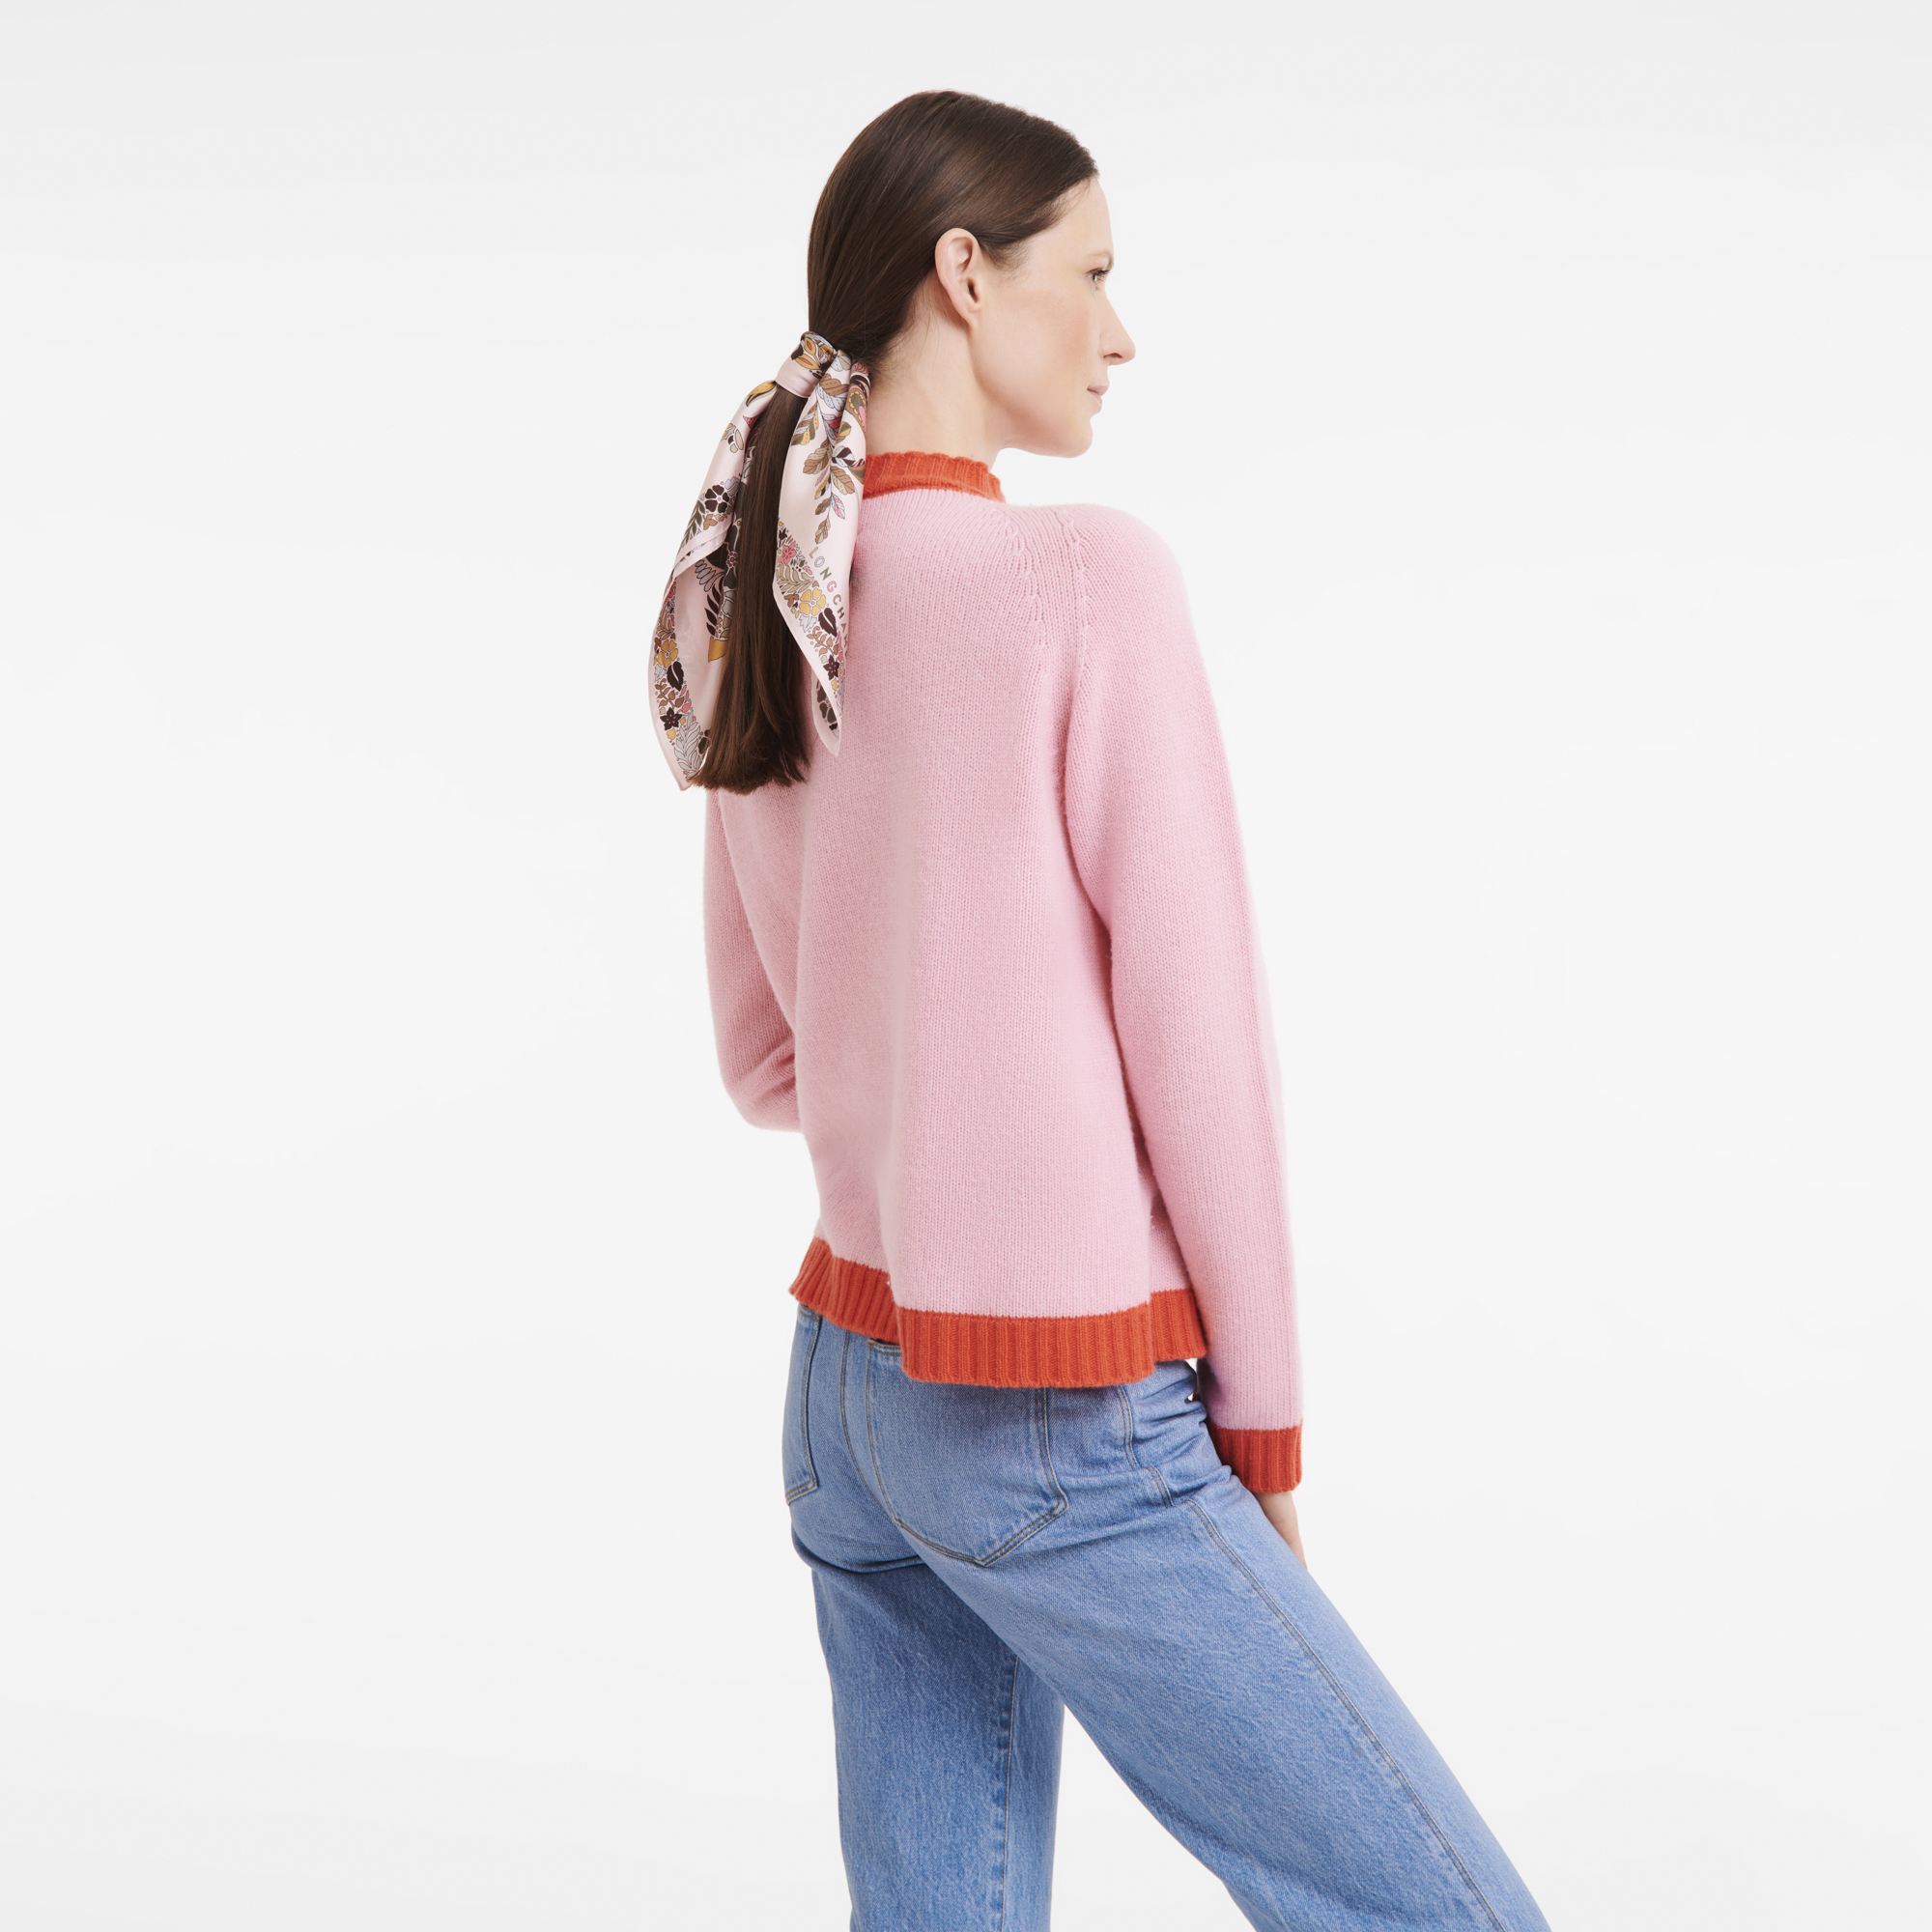 Longchamp 森林 絲質圍巾 50, 粉紅色